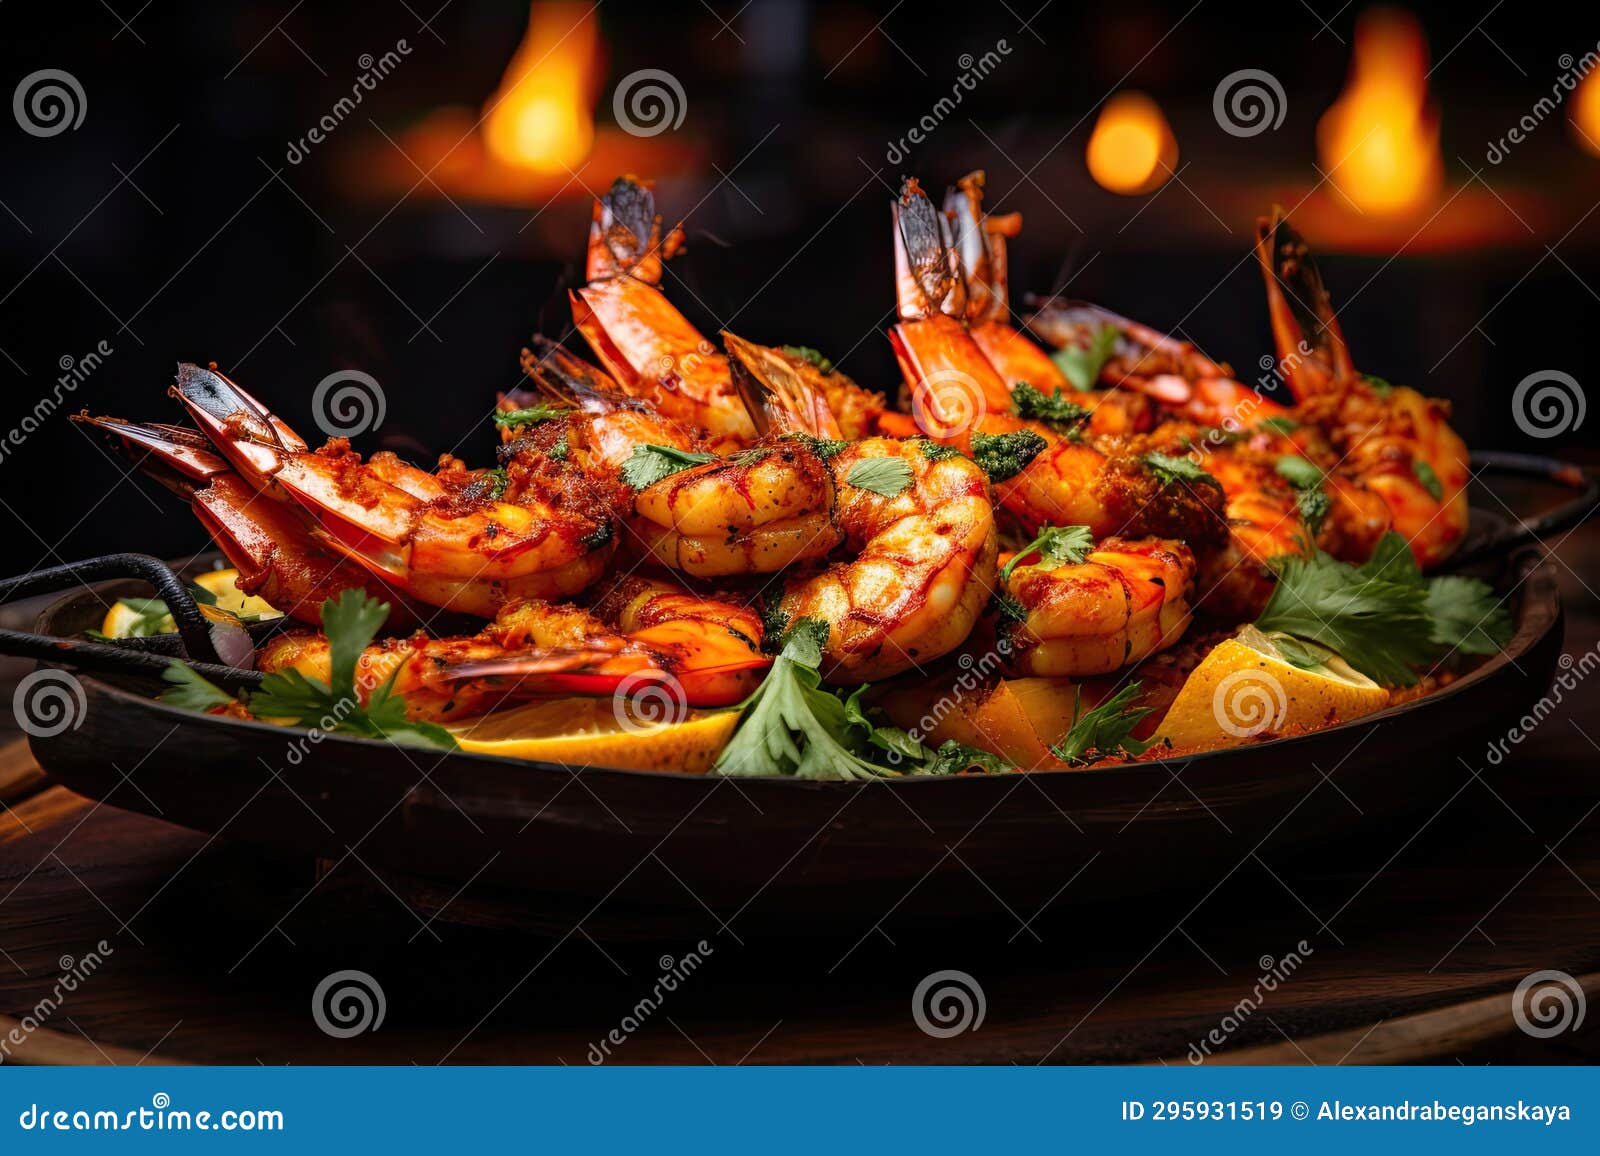 shrimp on a background of seafood tikka, grilled